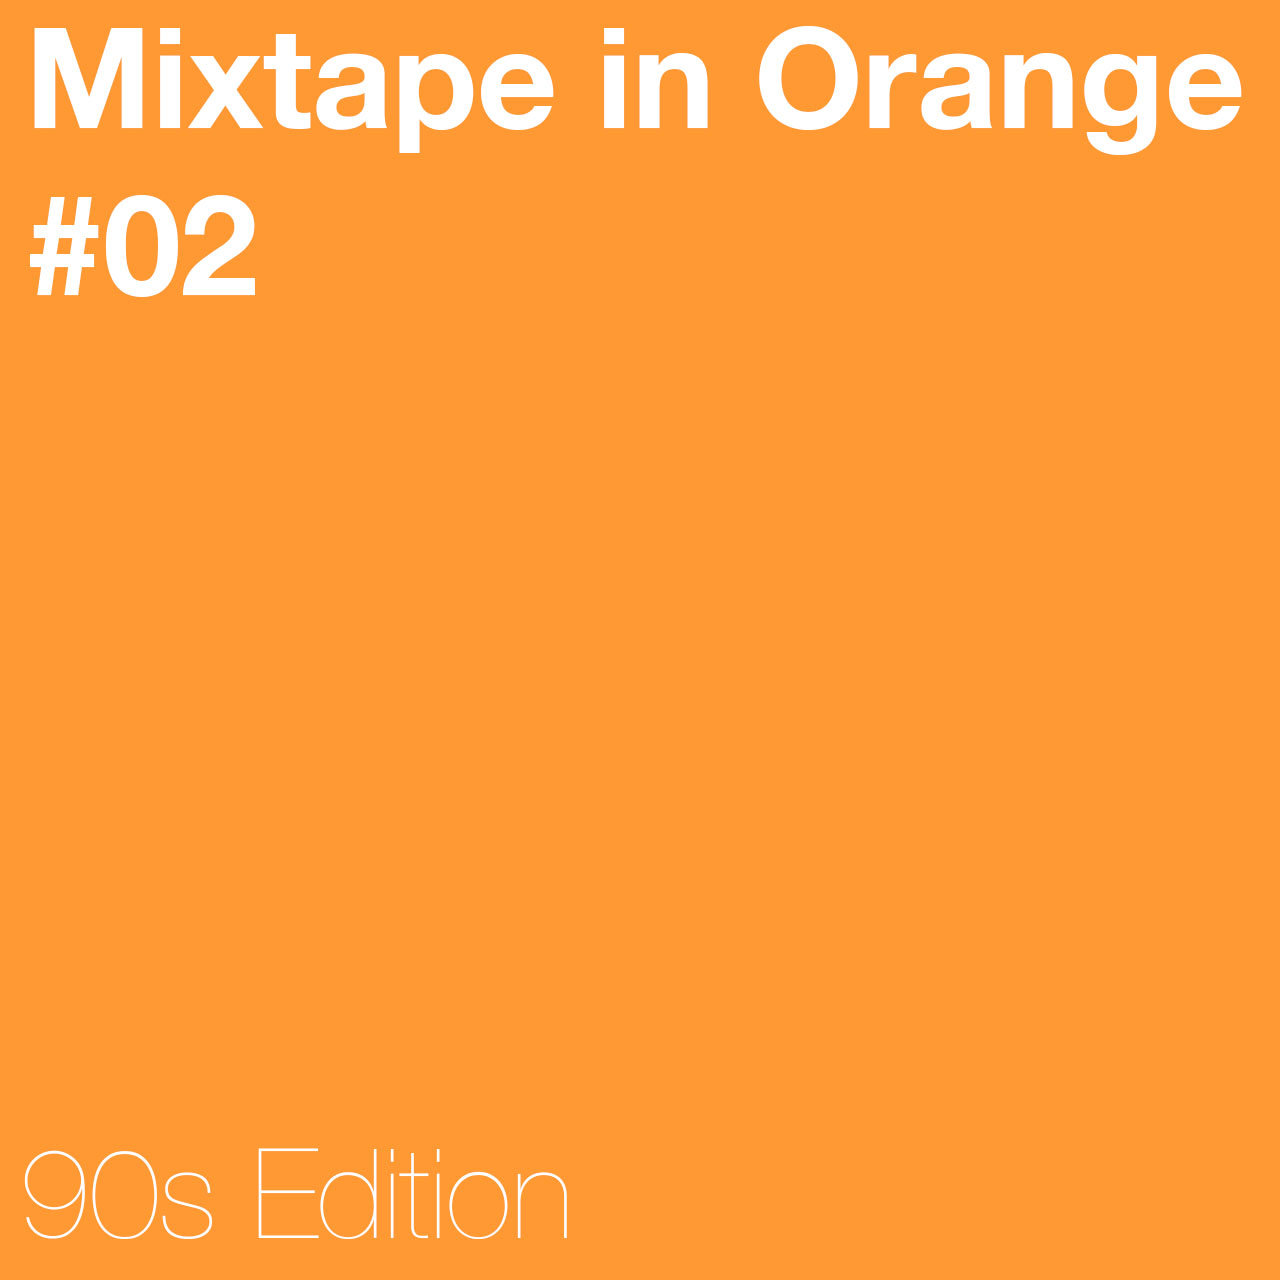 Mixtape in Orange #02 – 90s Edition